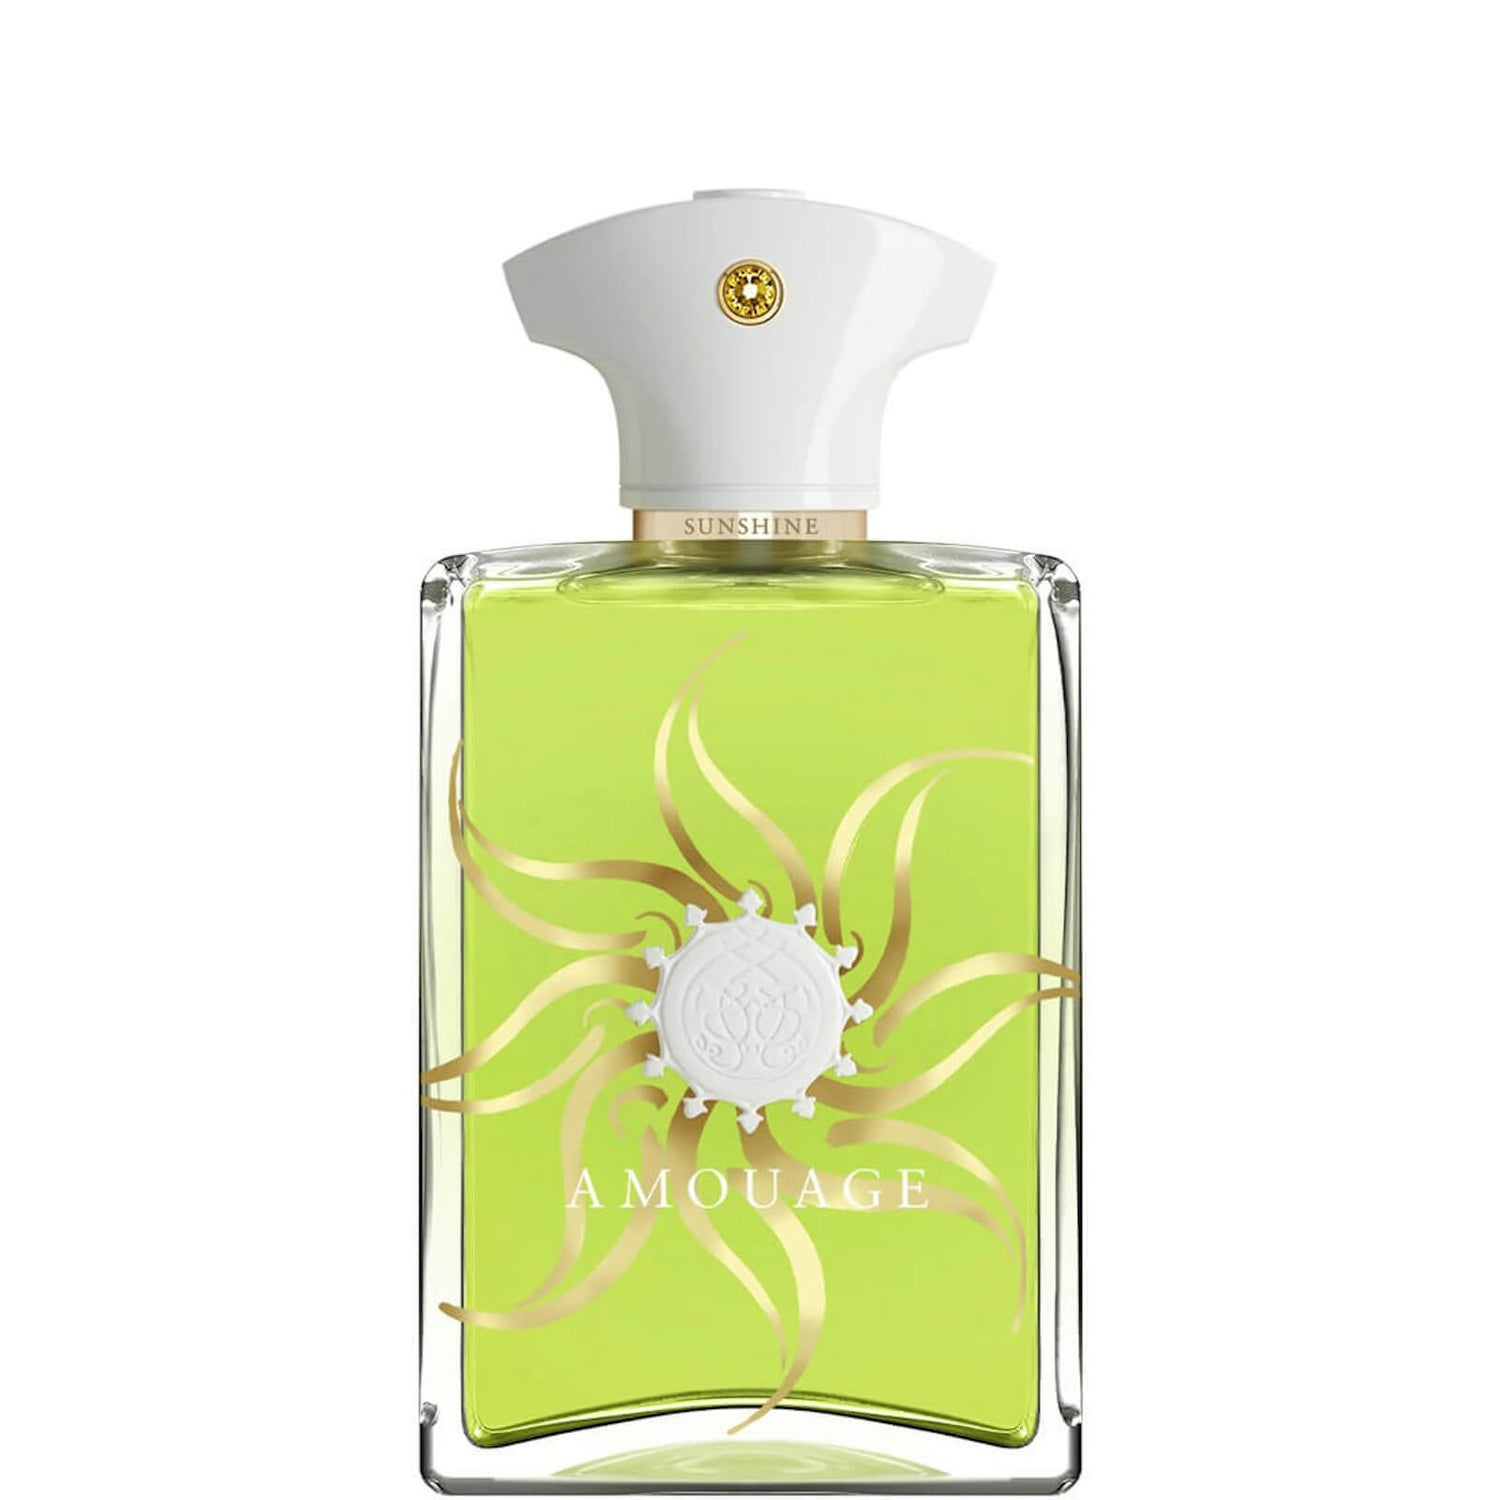 Agua de perfume para hombre Sunshine de Amouage (100 ml)